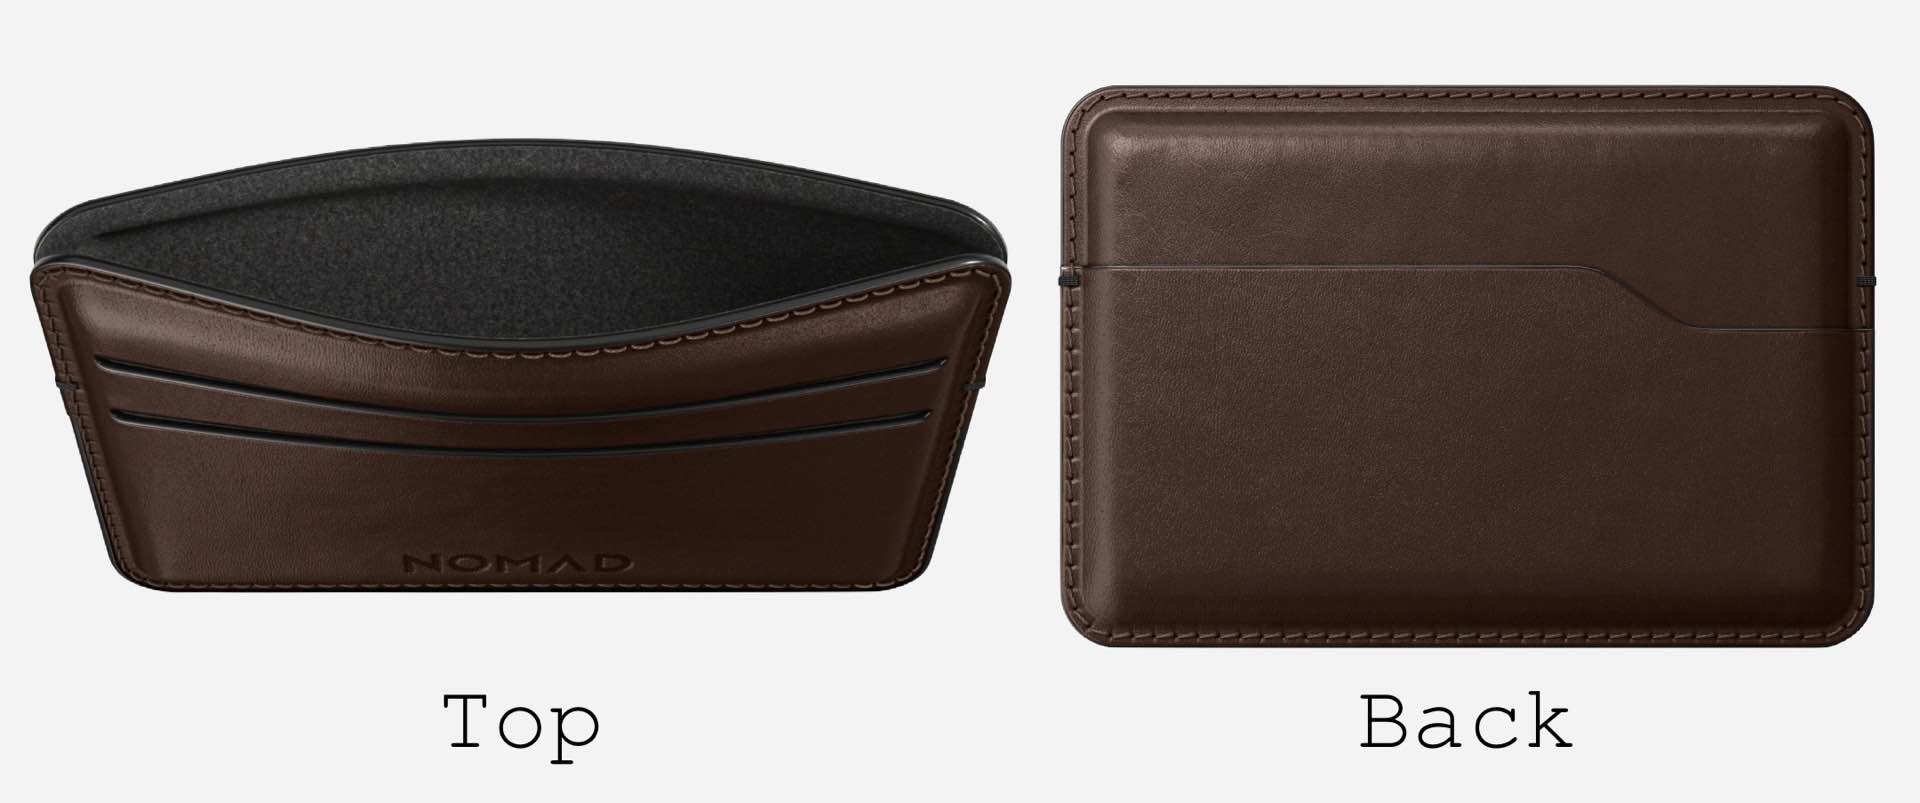 nomad-horween-leather-card-wallet-top-back